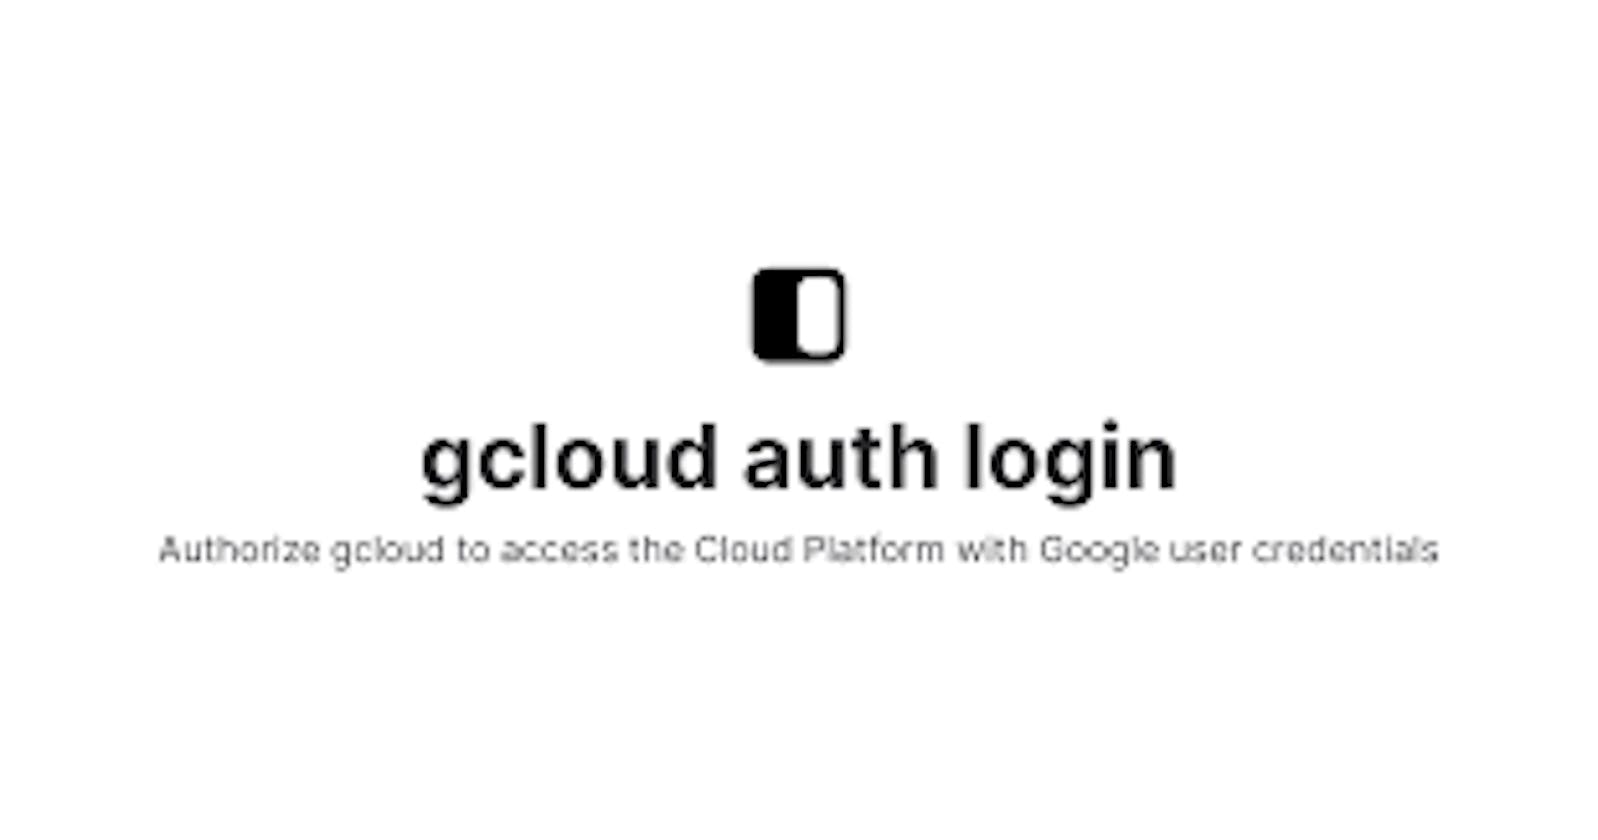 gcloud auth login using CLI